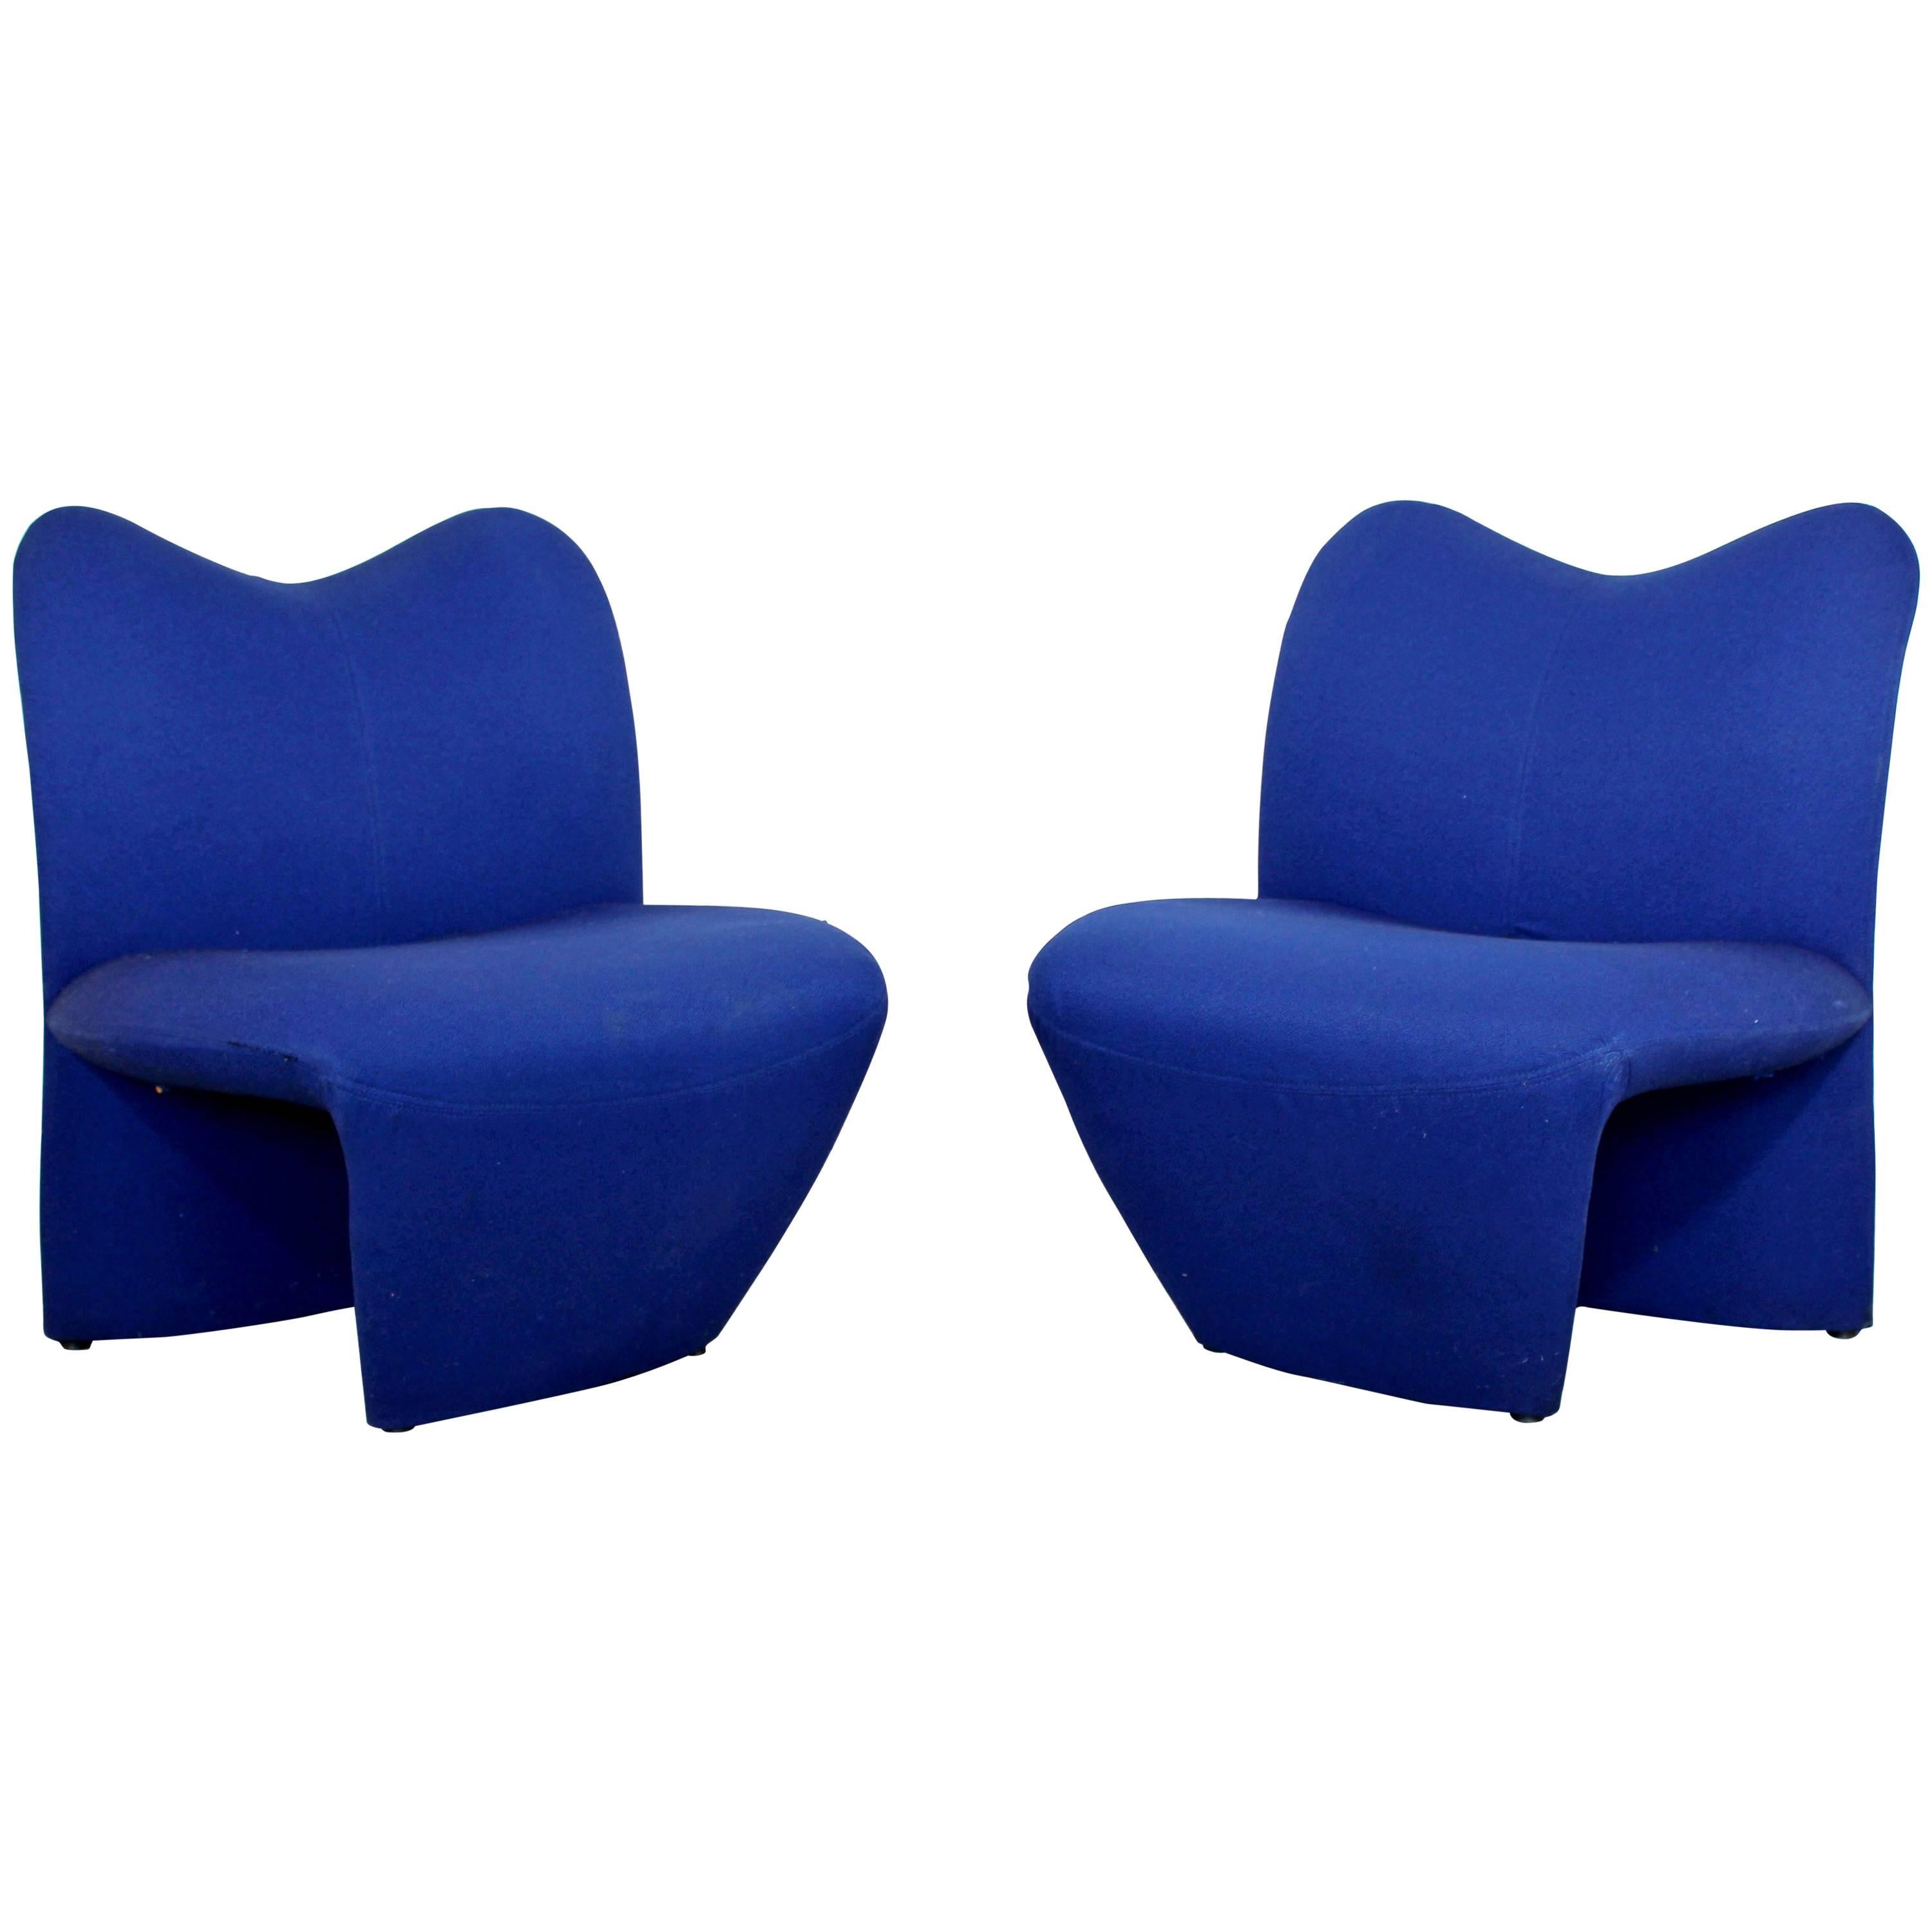 Mid-Century Modern Pair of Sculpted Accent Chairs Paulin Panton Style Italian